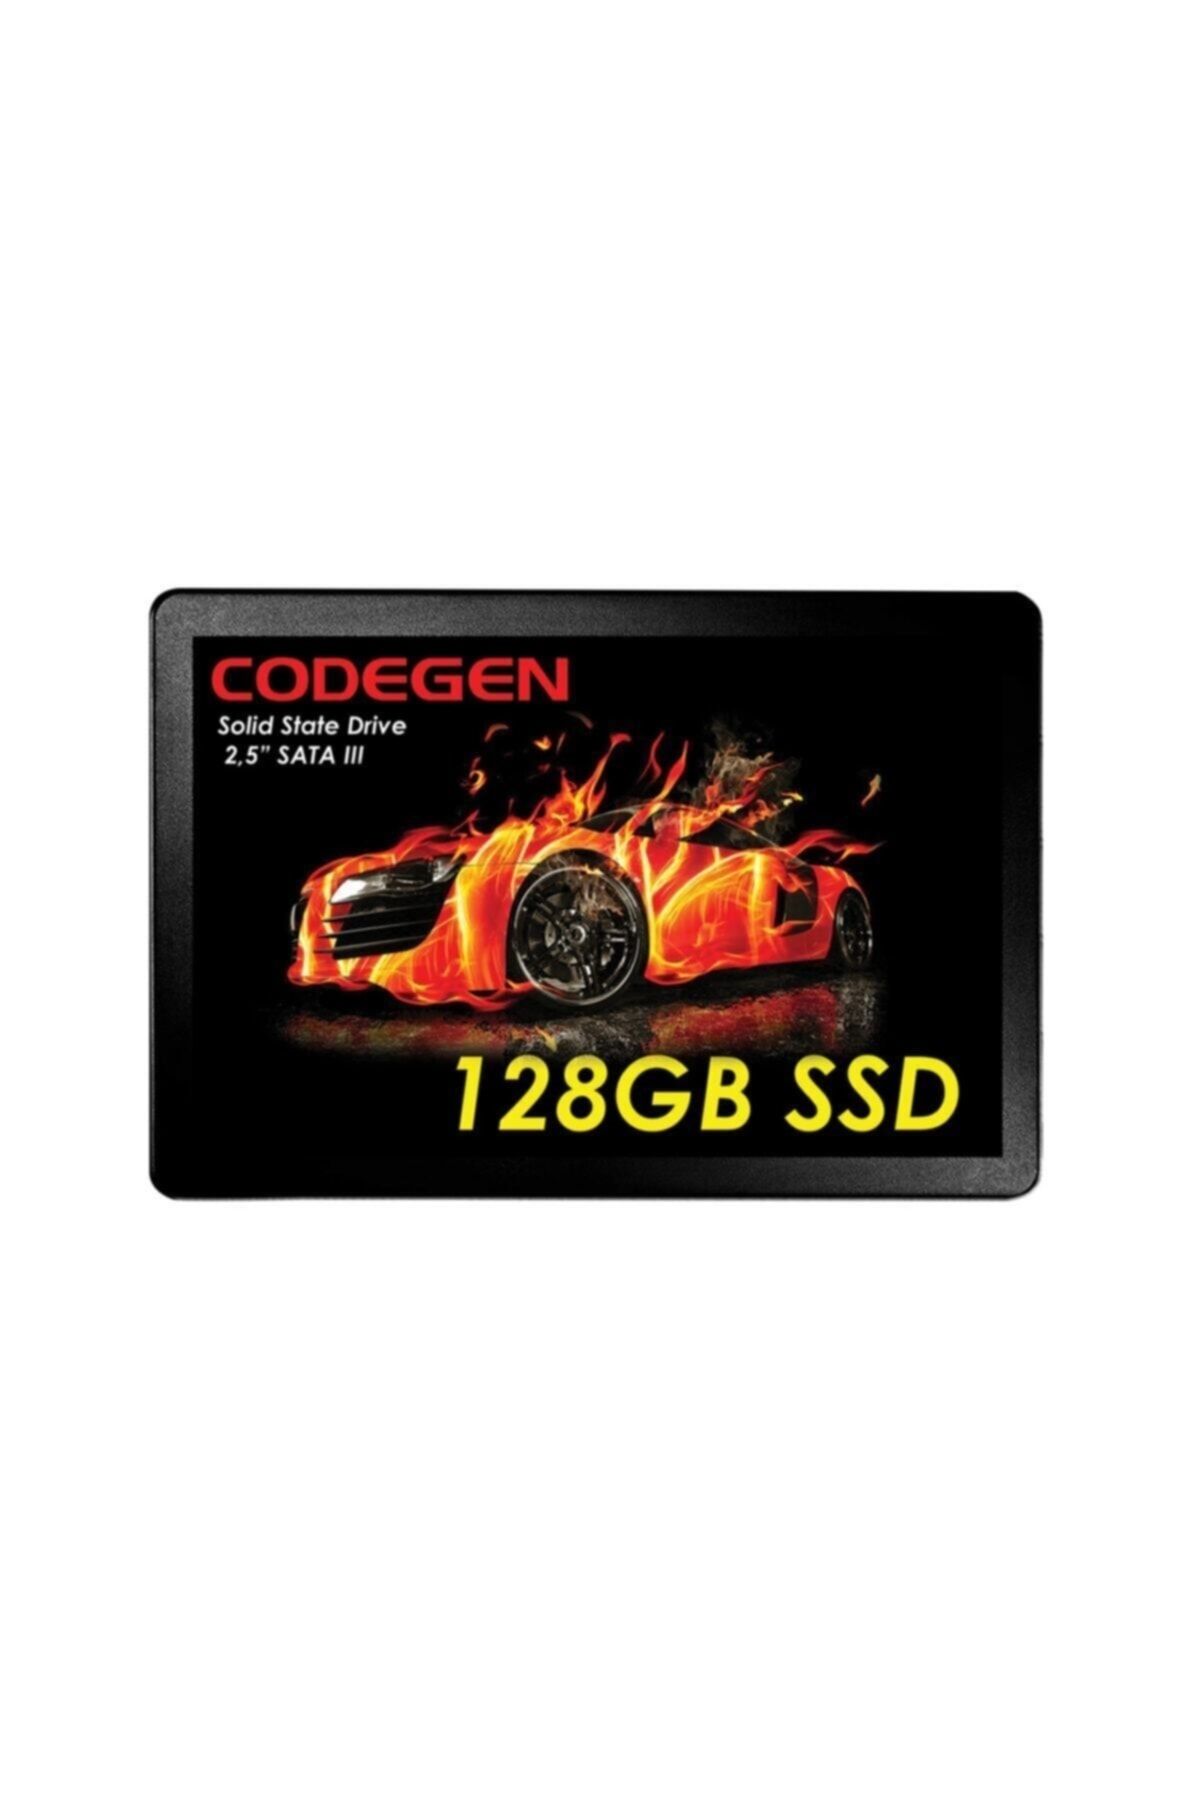 CODEGEN Cdg-128gb-ssd25 2.5" 128gb  500/350mb/s Sata Ssd Disk